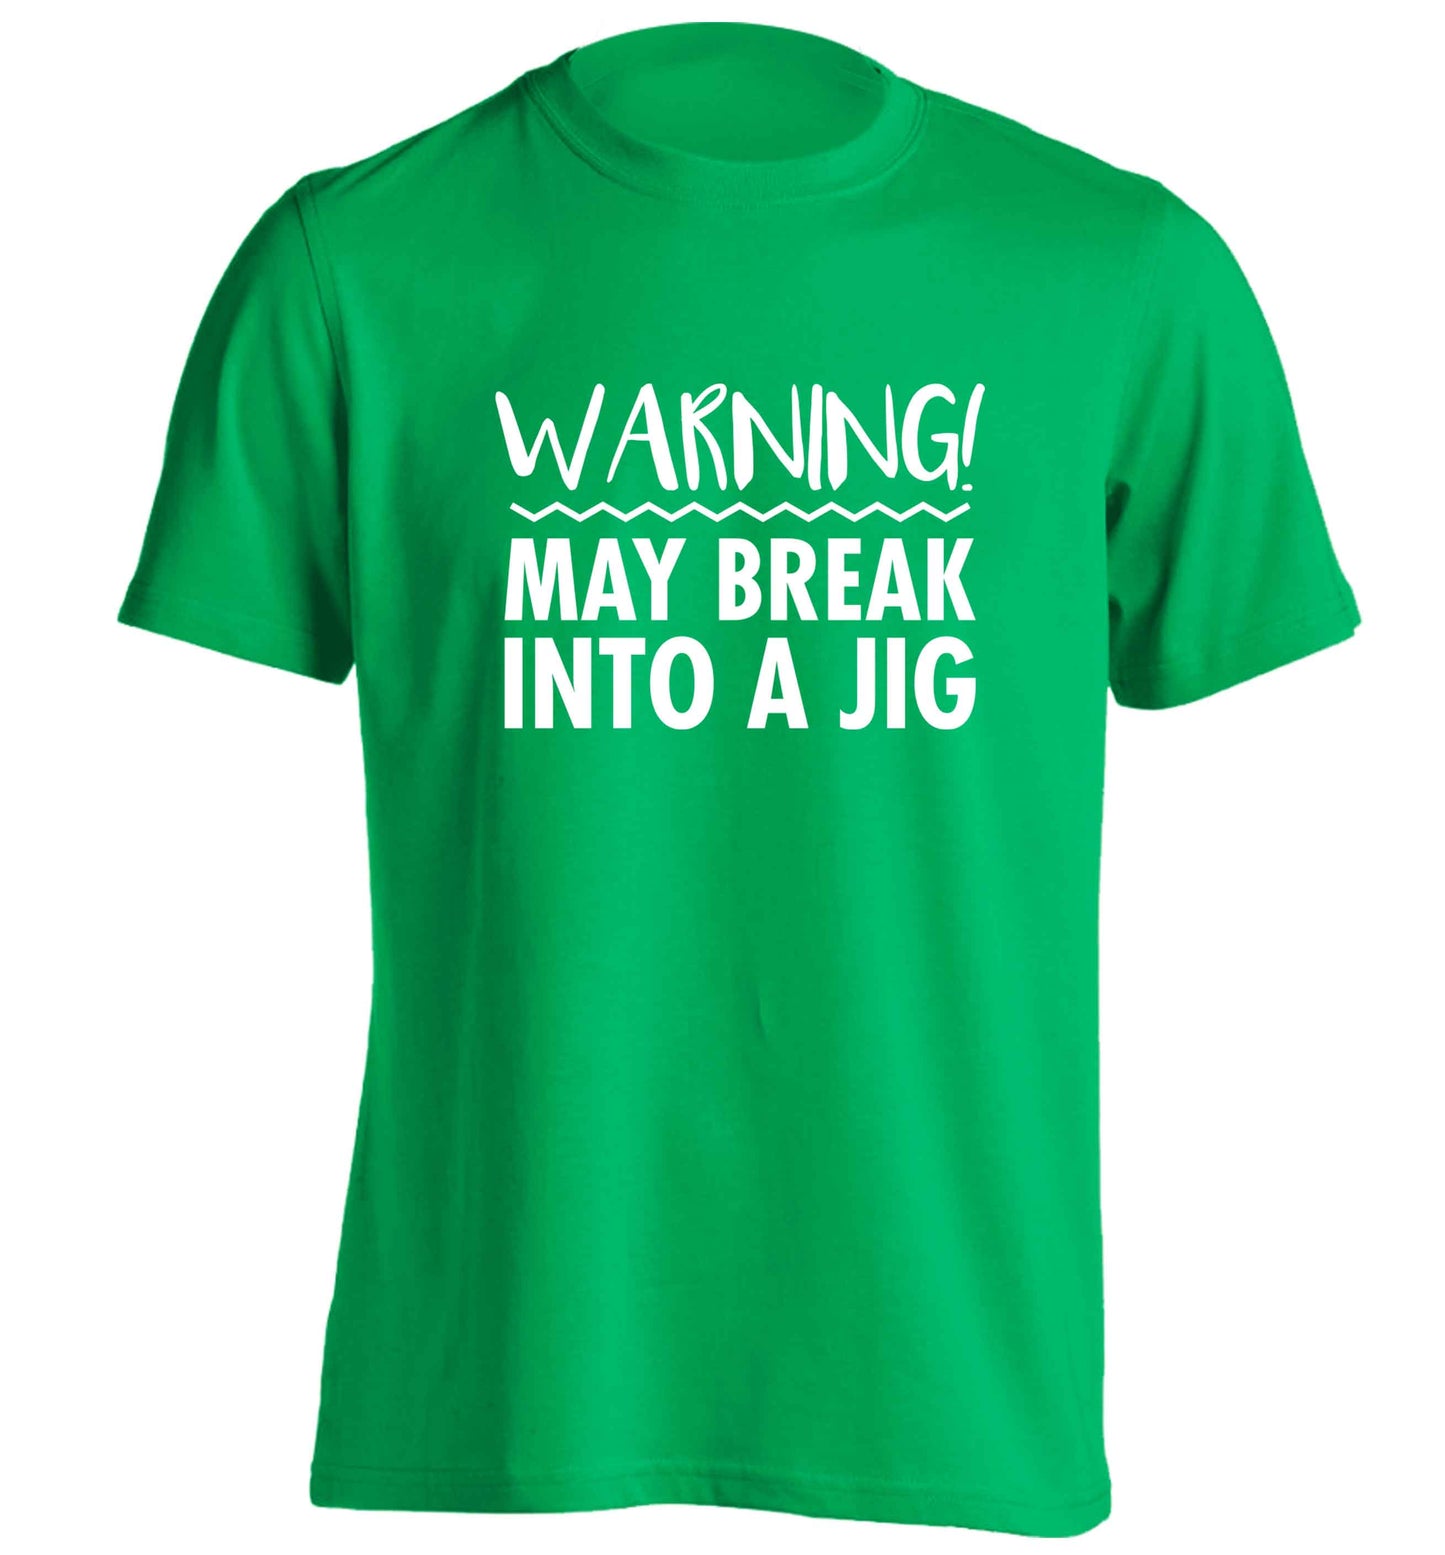 Warning may break into a jig adults unisex green Tshirt 2XL